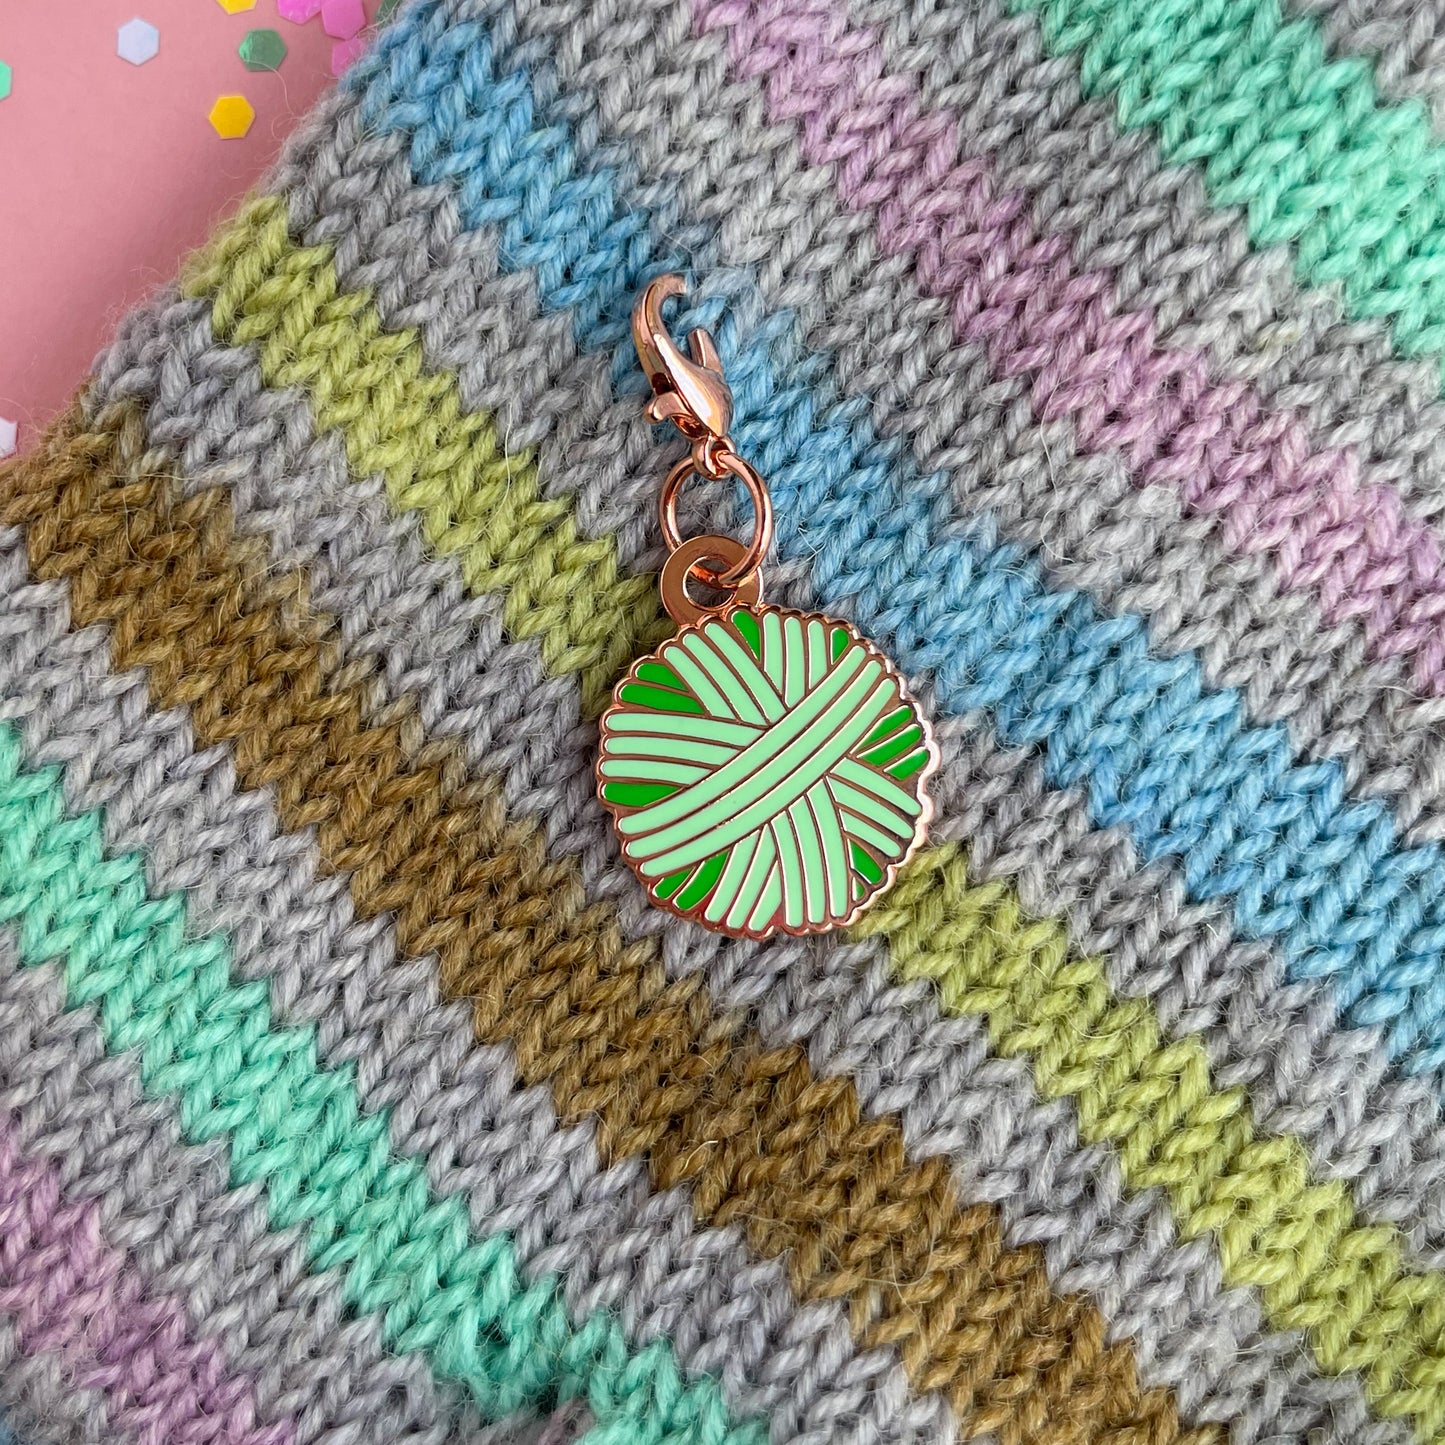 A mint green yarn ball charm on a knit background